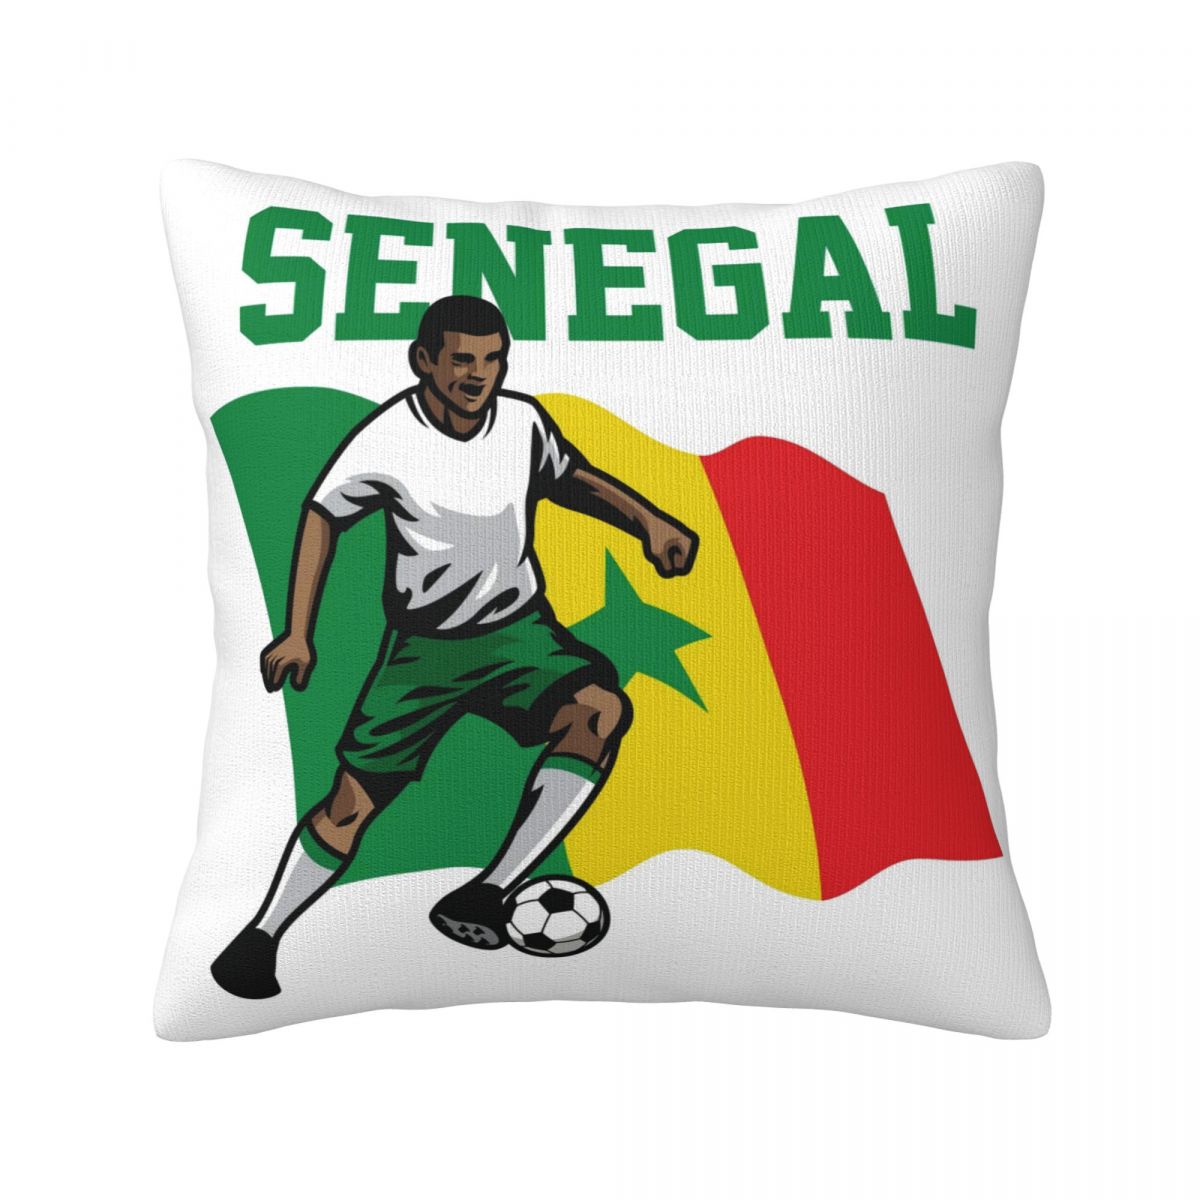 Senegal Soccer Player Throw Pillow Covers 18x18